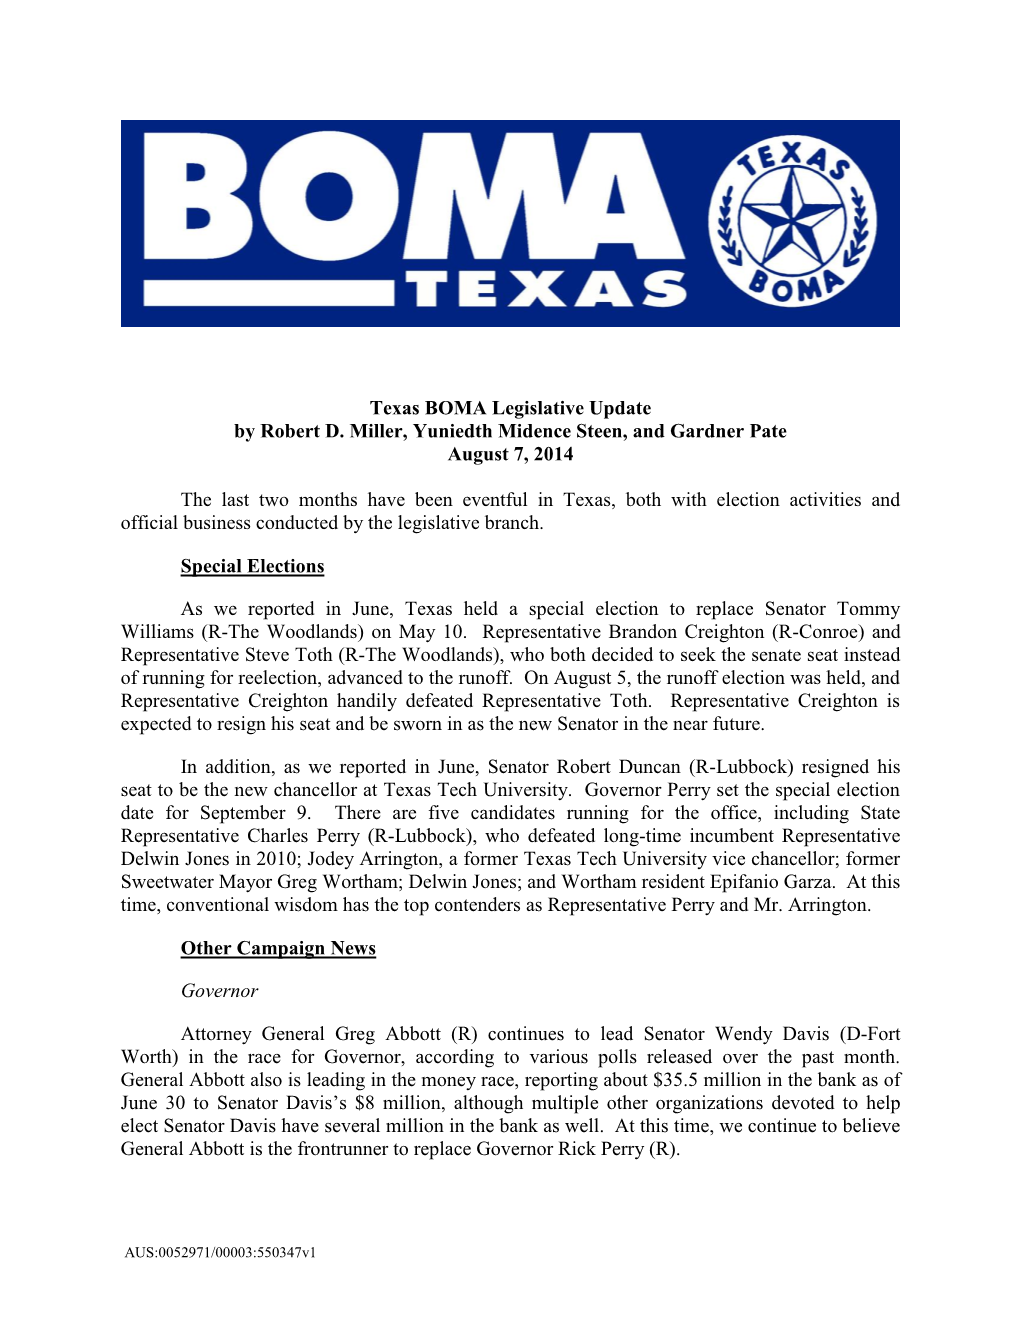 Texas BOMA Legislative Update by Robert D